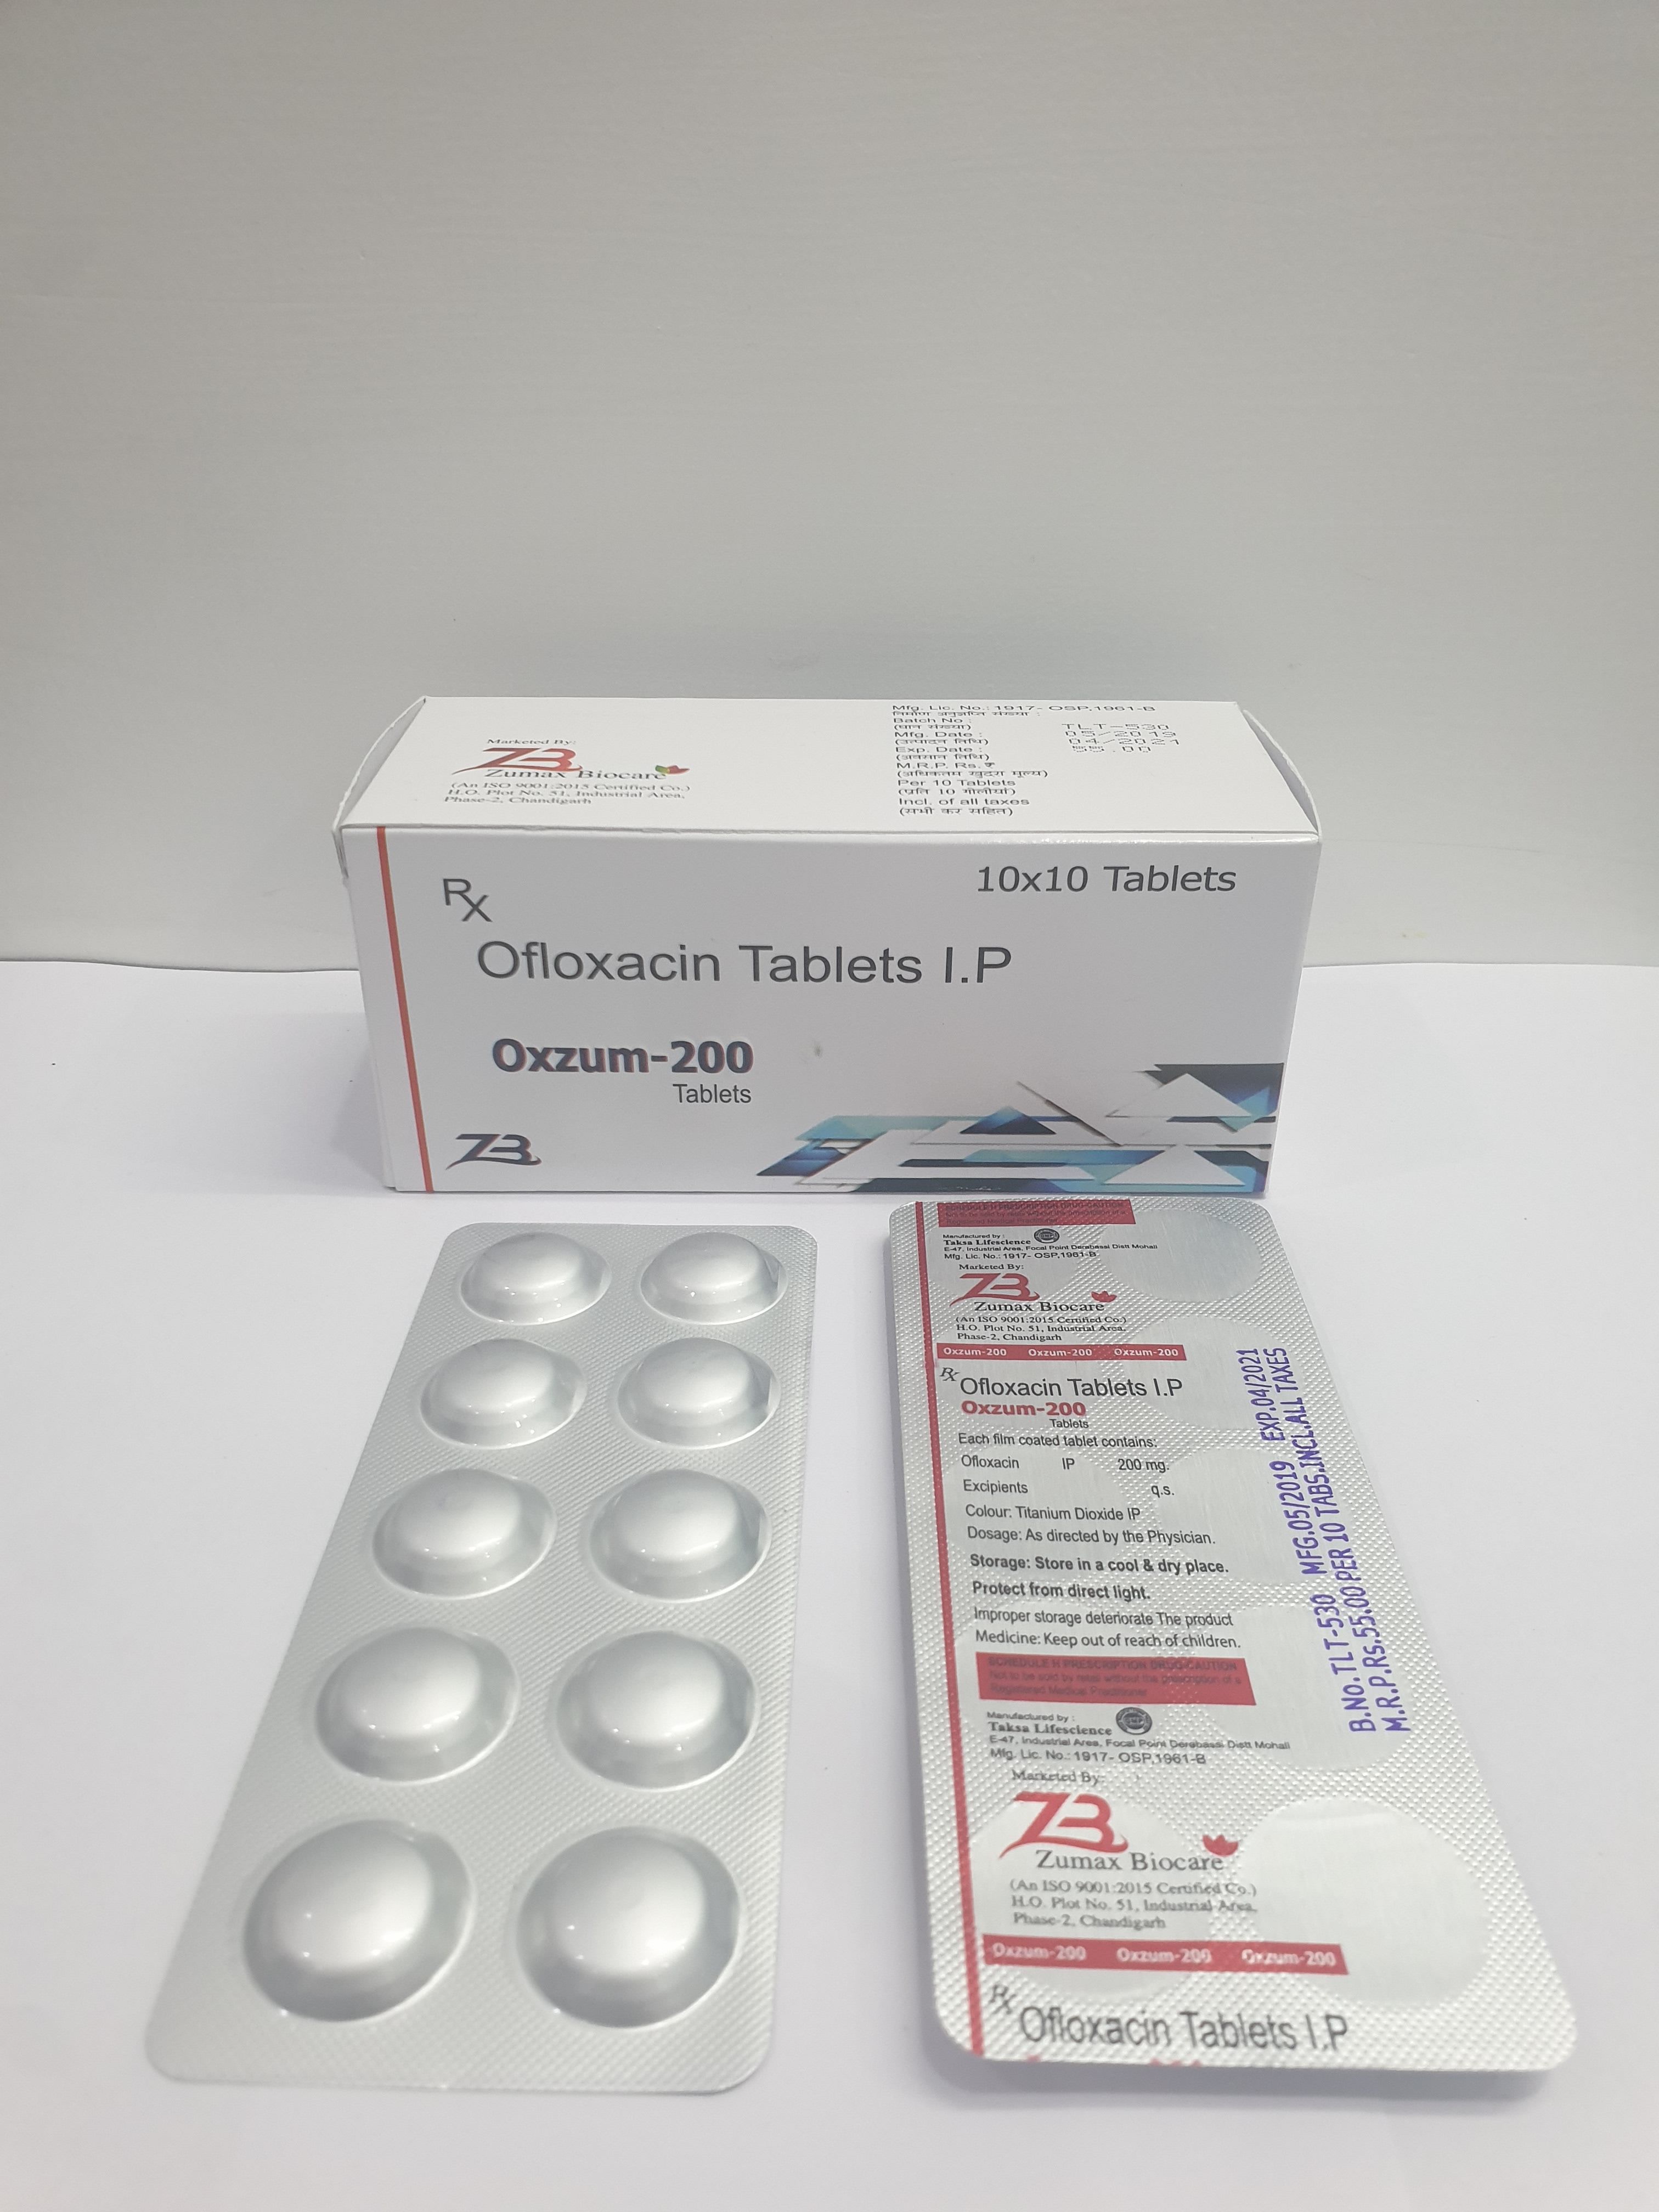 Product Name: Oxzum 200, Compositions of Ofloxacin Tablets IP are Ofloxacin Tablets IP - Zumax Biocare